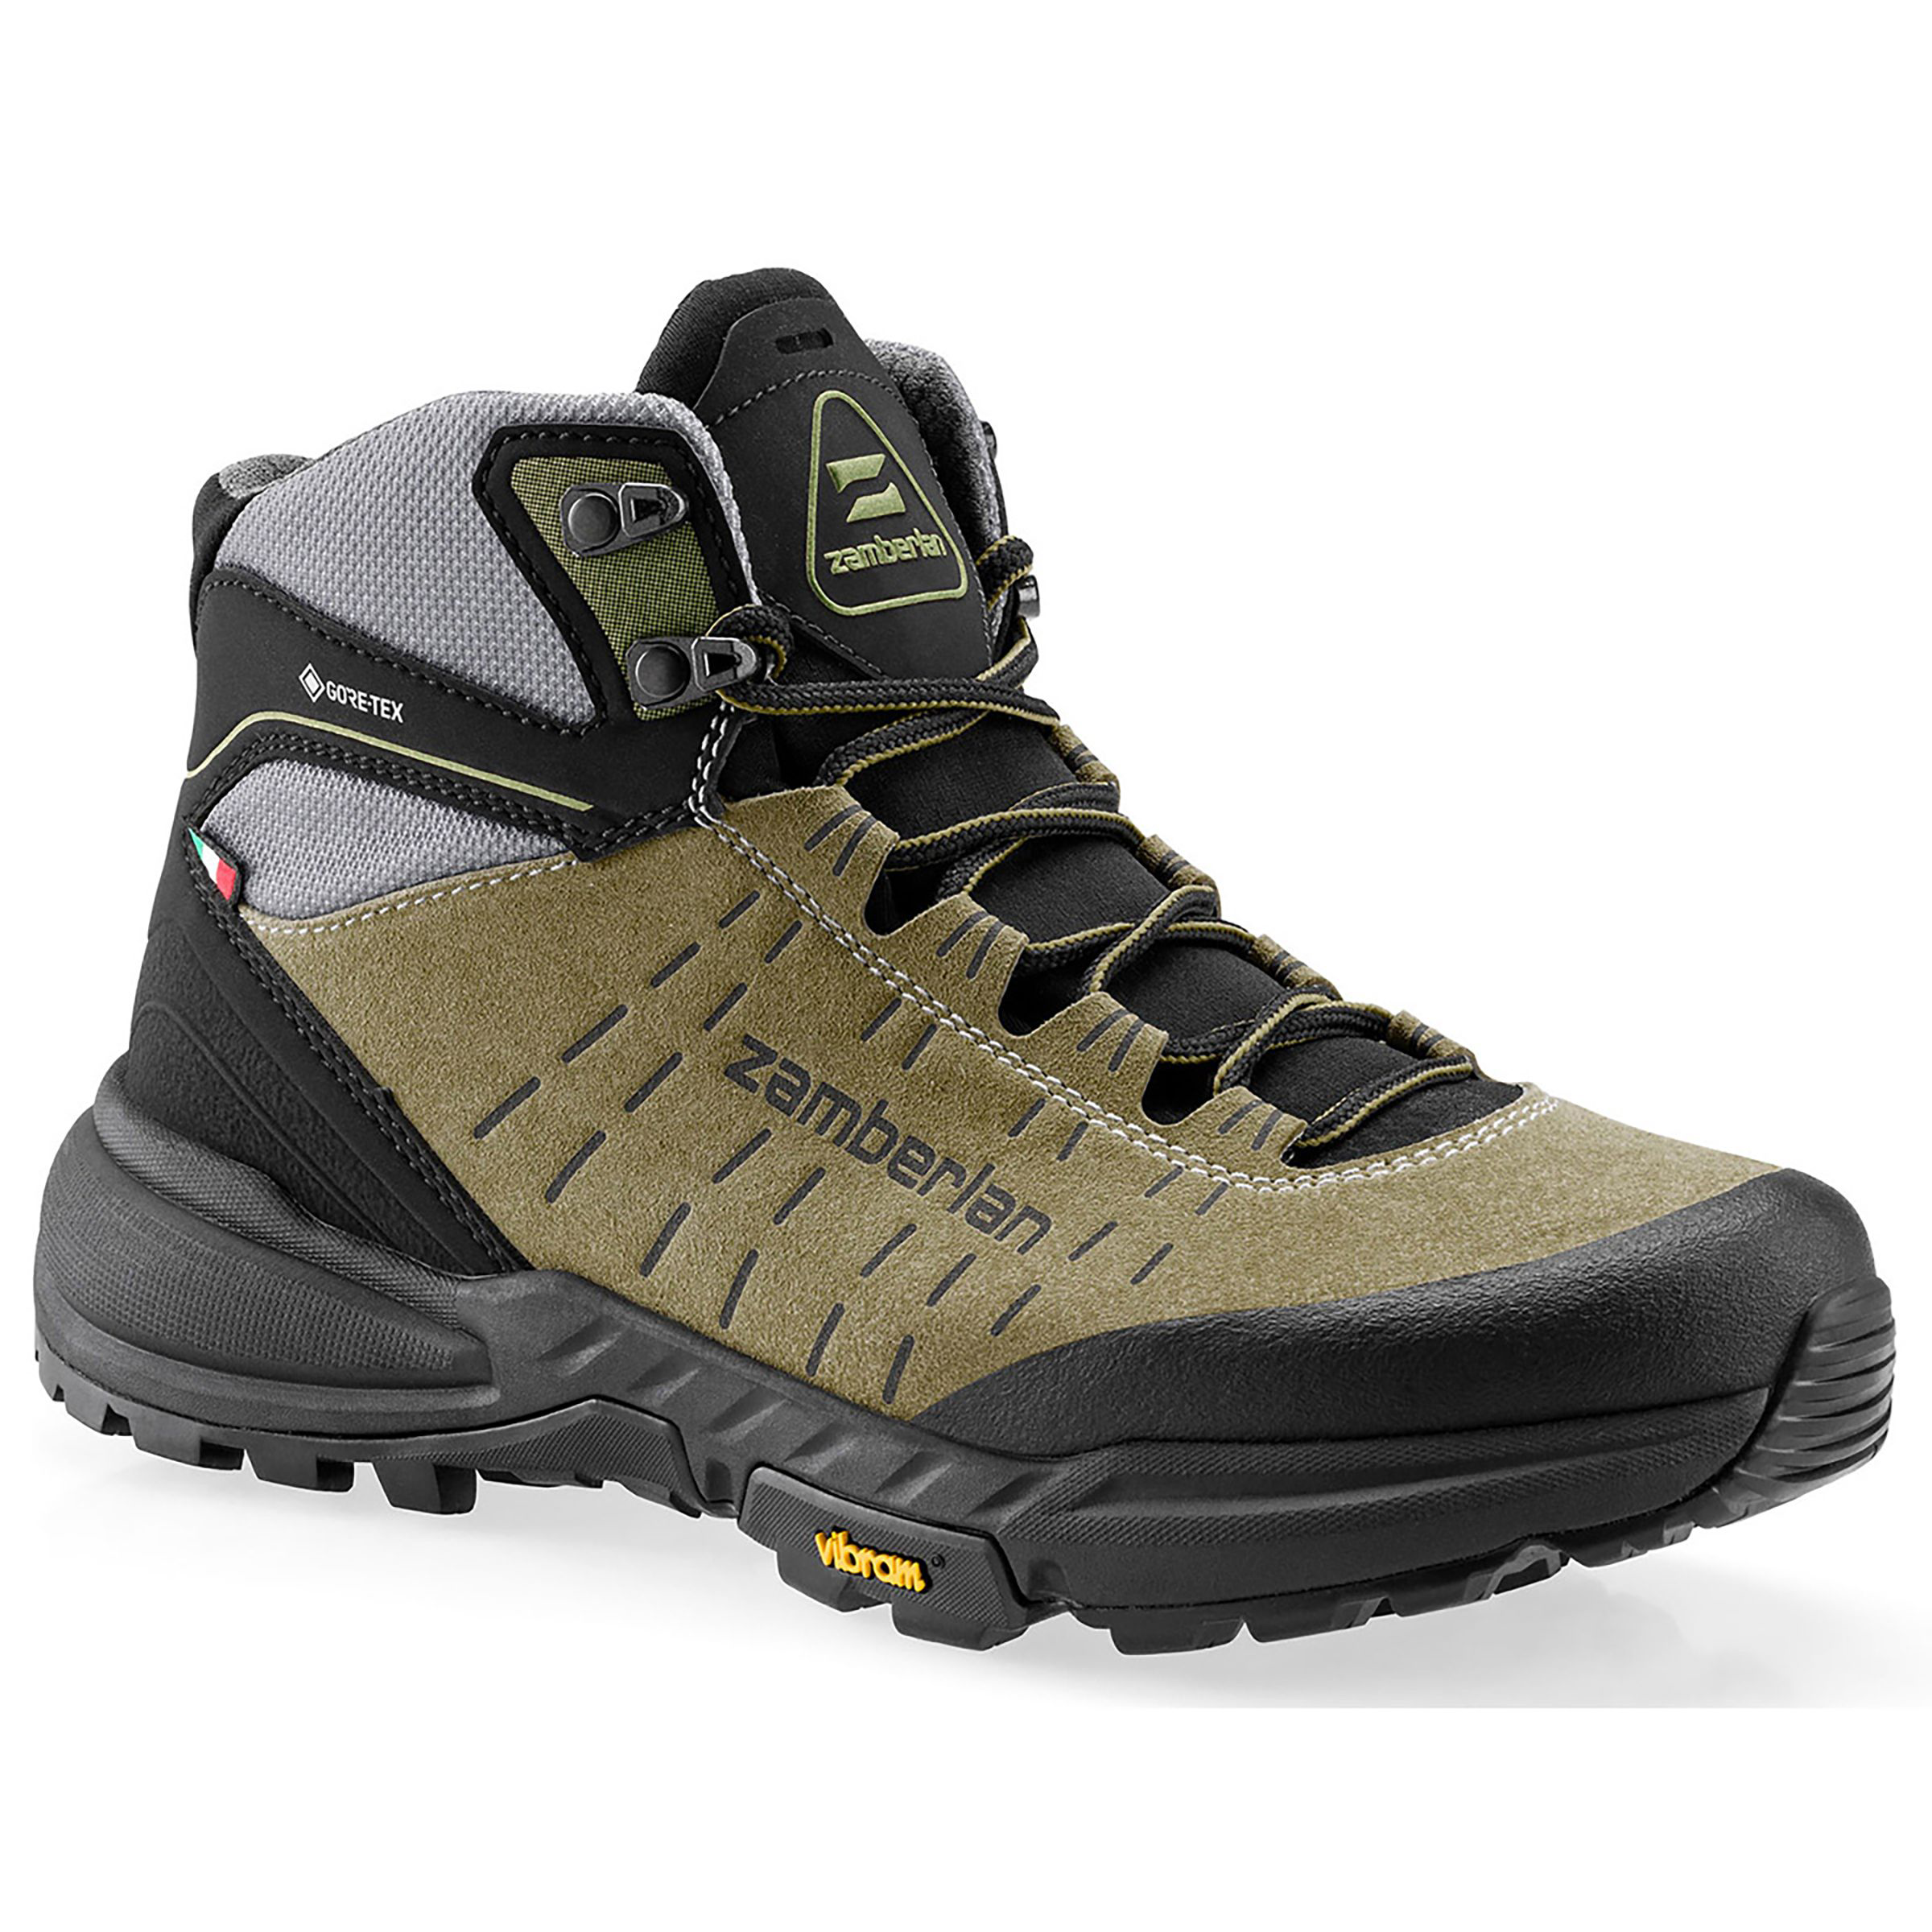 Zamberlan 334 Circe GTX Waterproof Hiking Boots for Ladies - Green - 6.5M